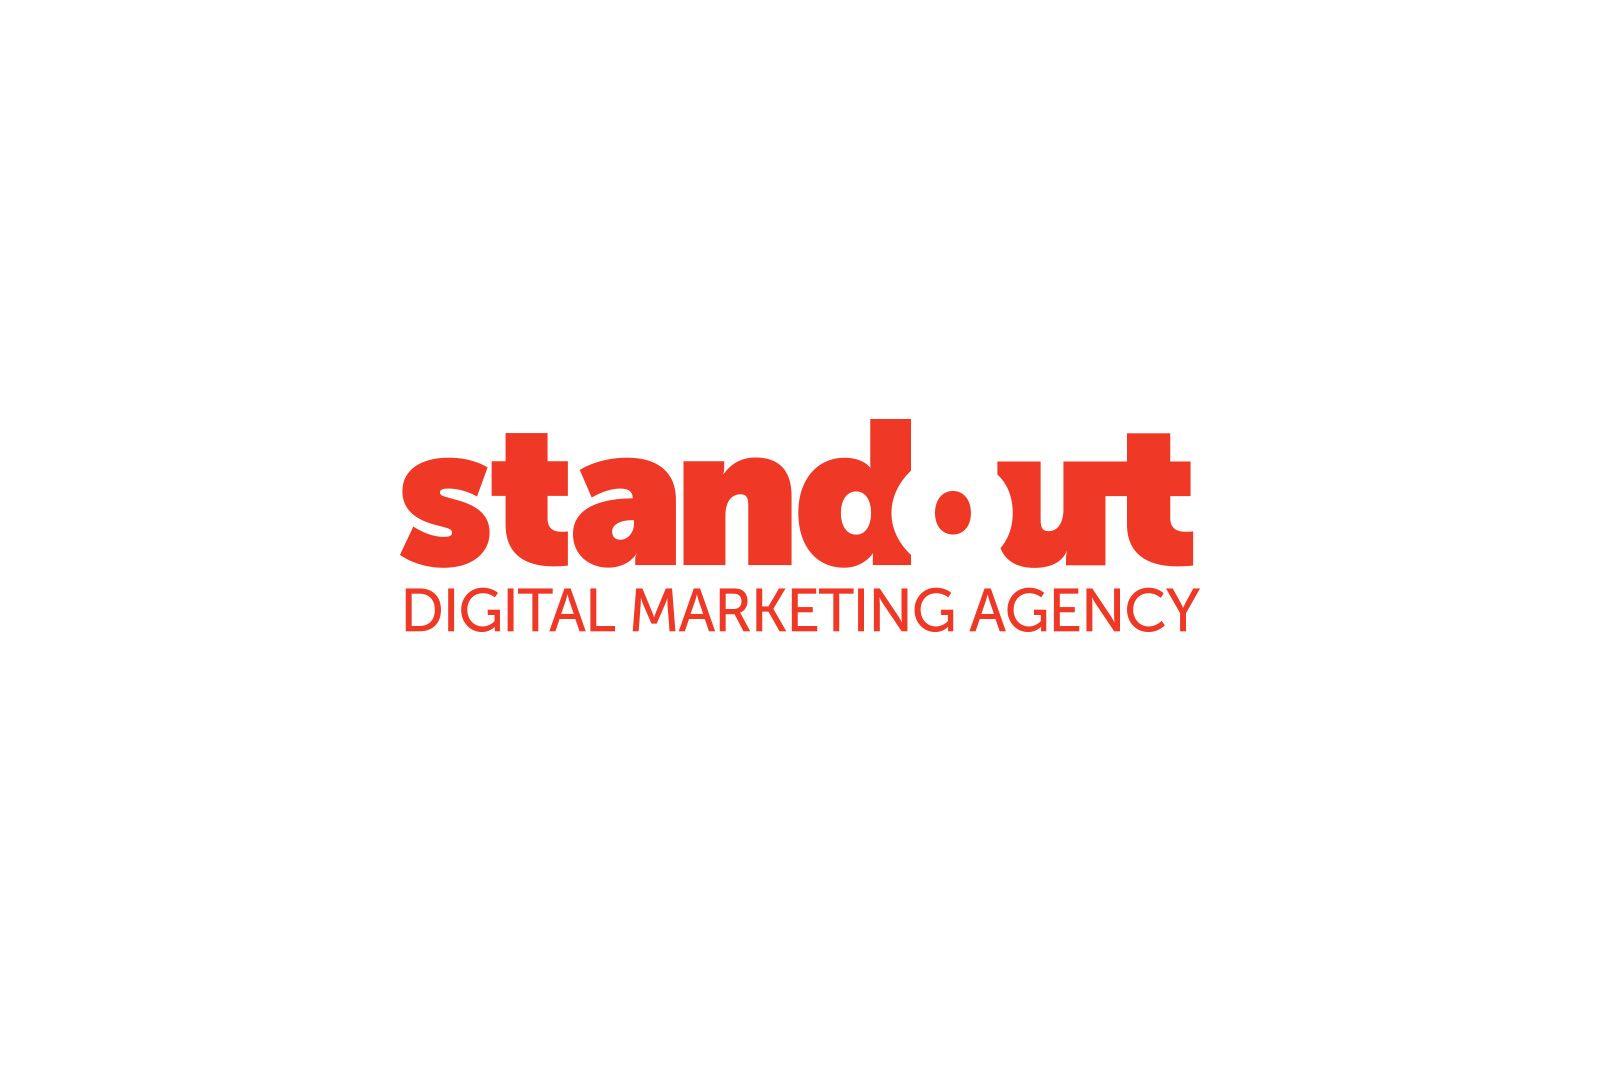 Agency Logo - Standout Digital Marketing Agency Logo | Los Angeles Web Design Company